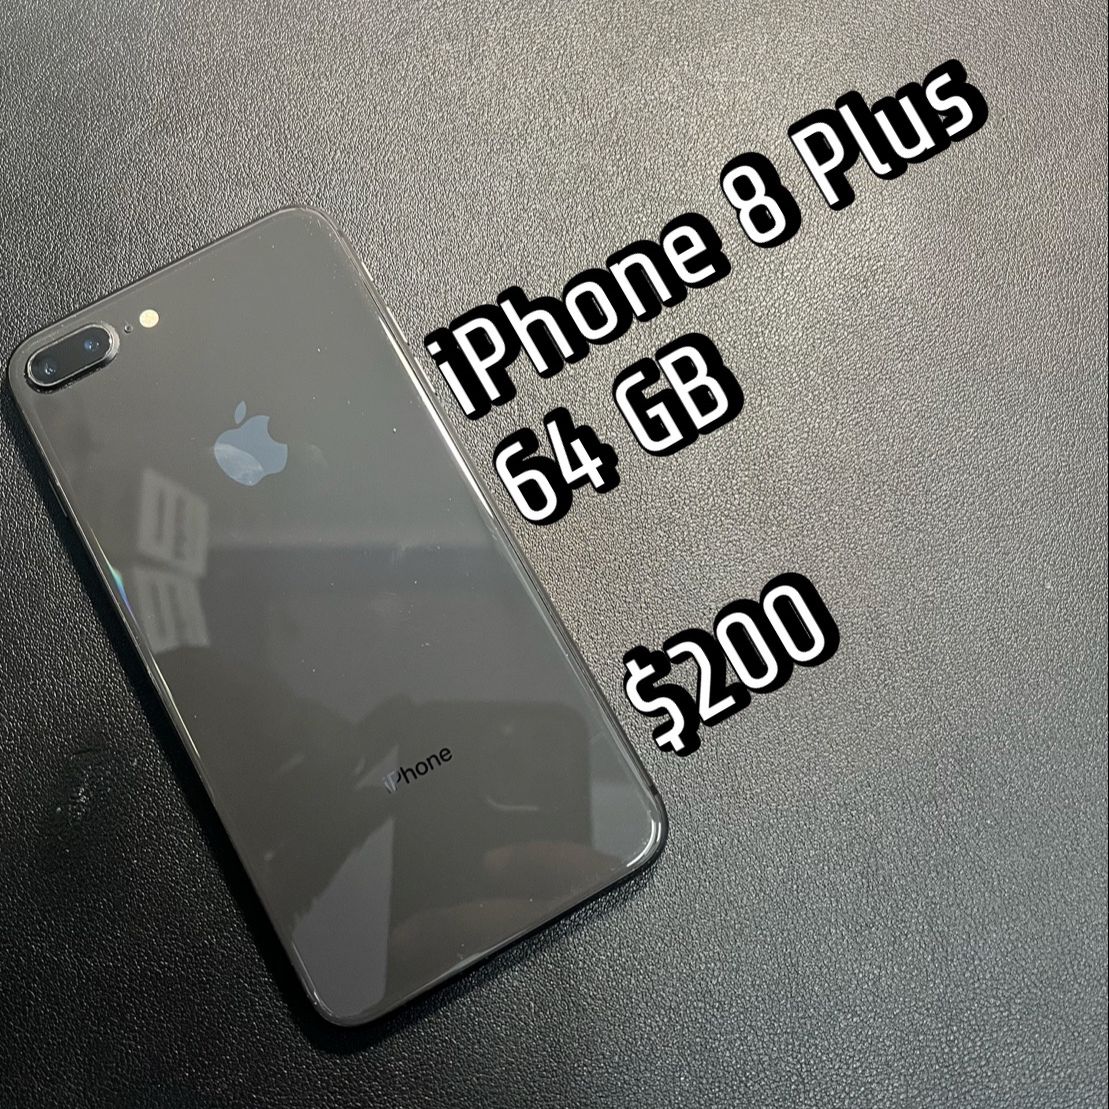 iPhone 8 Plus 64GB black unlocked